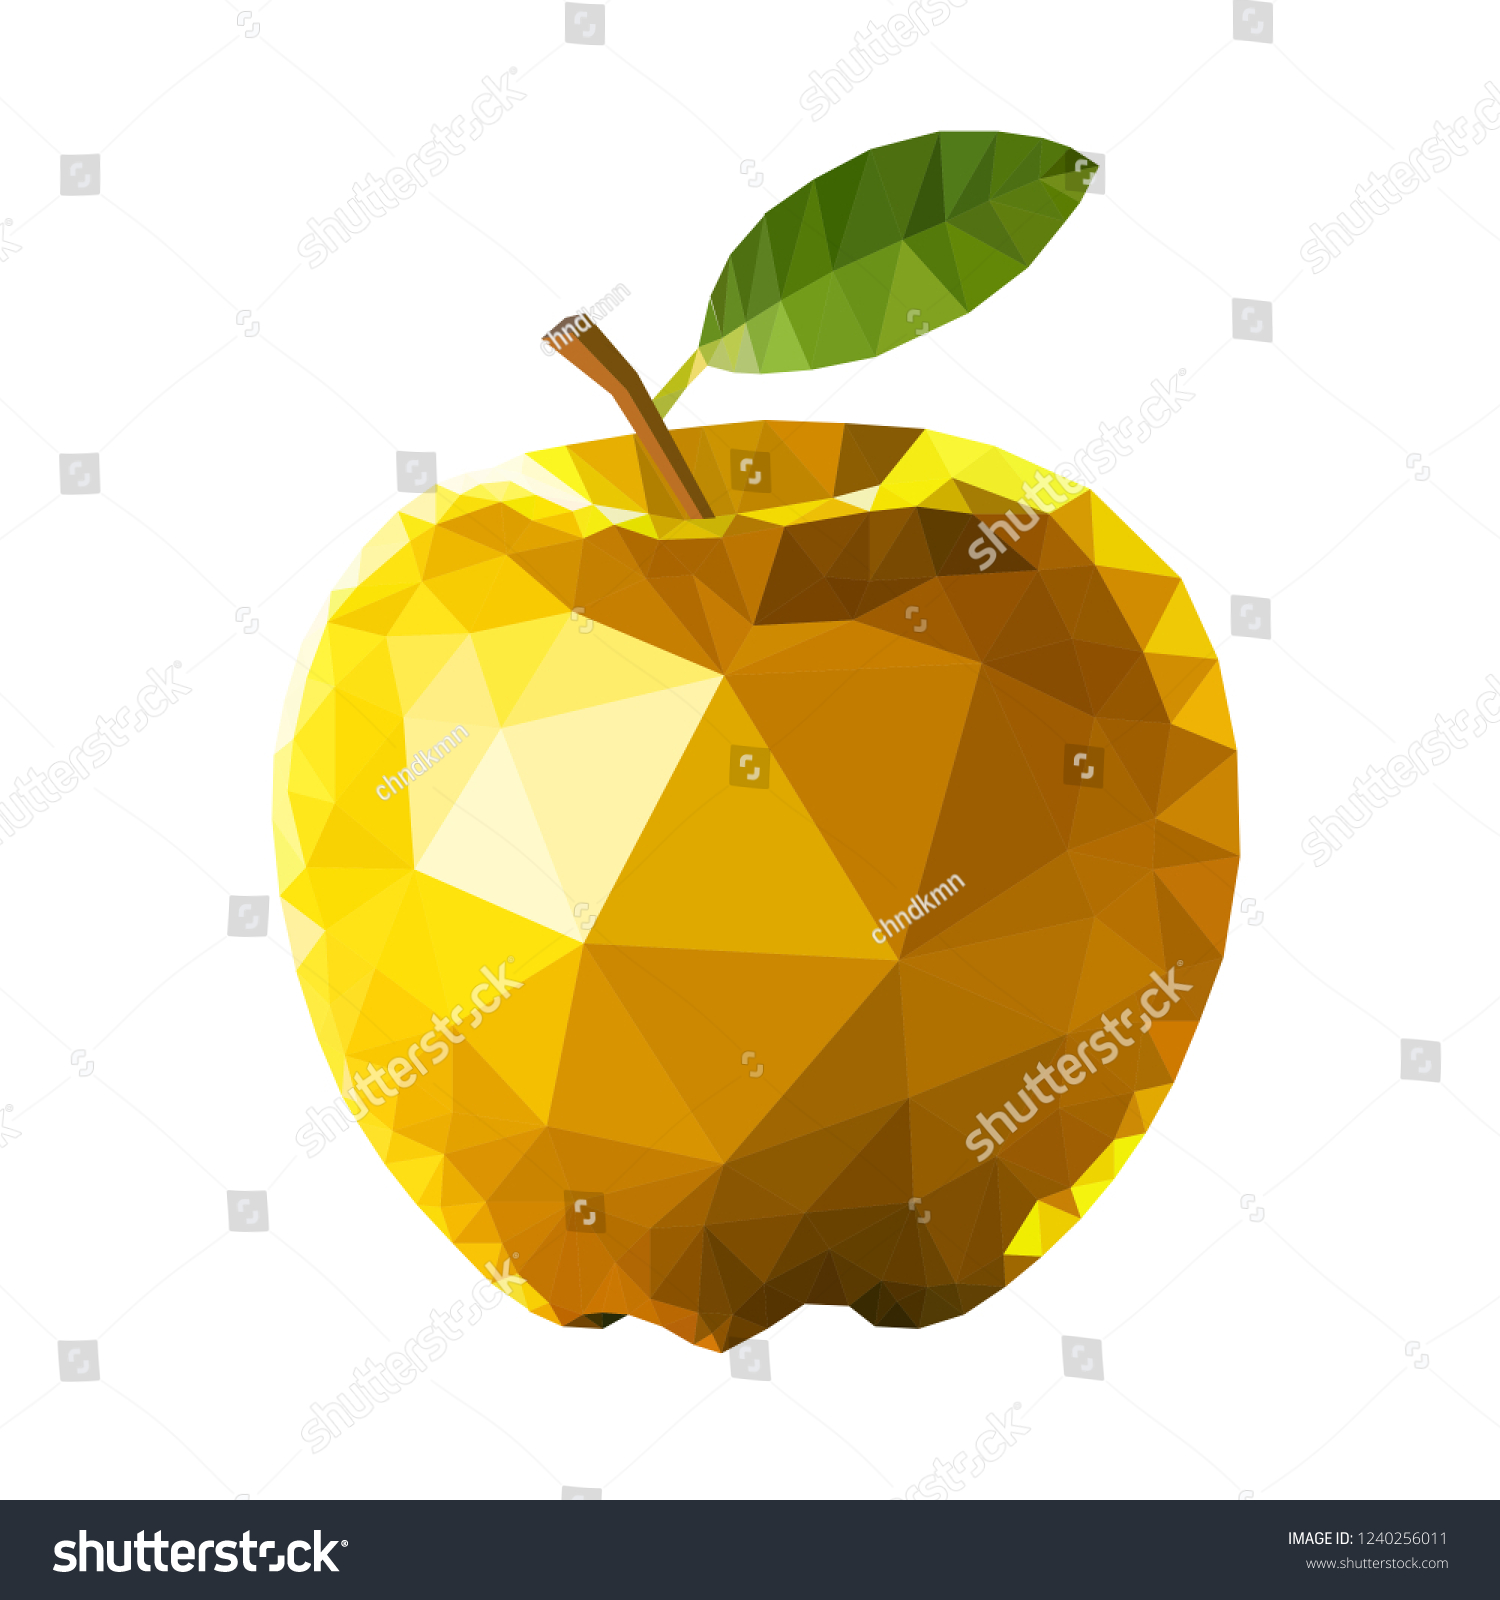 Golden Apple Polygon Design Crystal Like Stock Vector Royalty Free